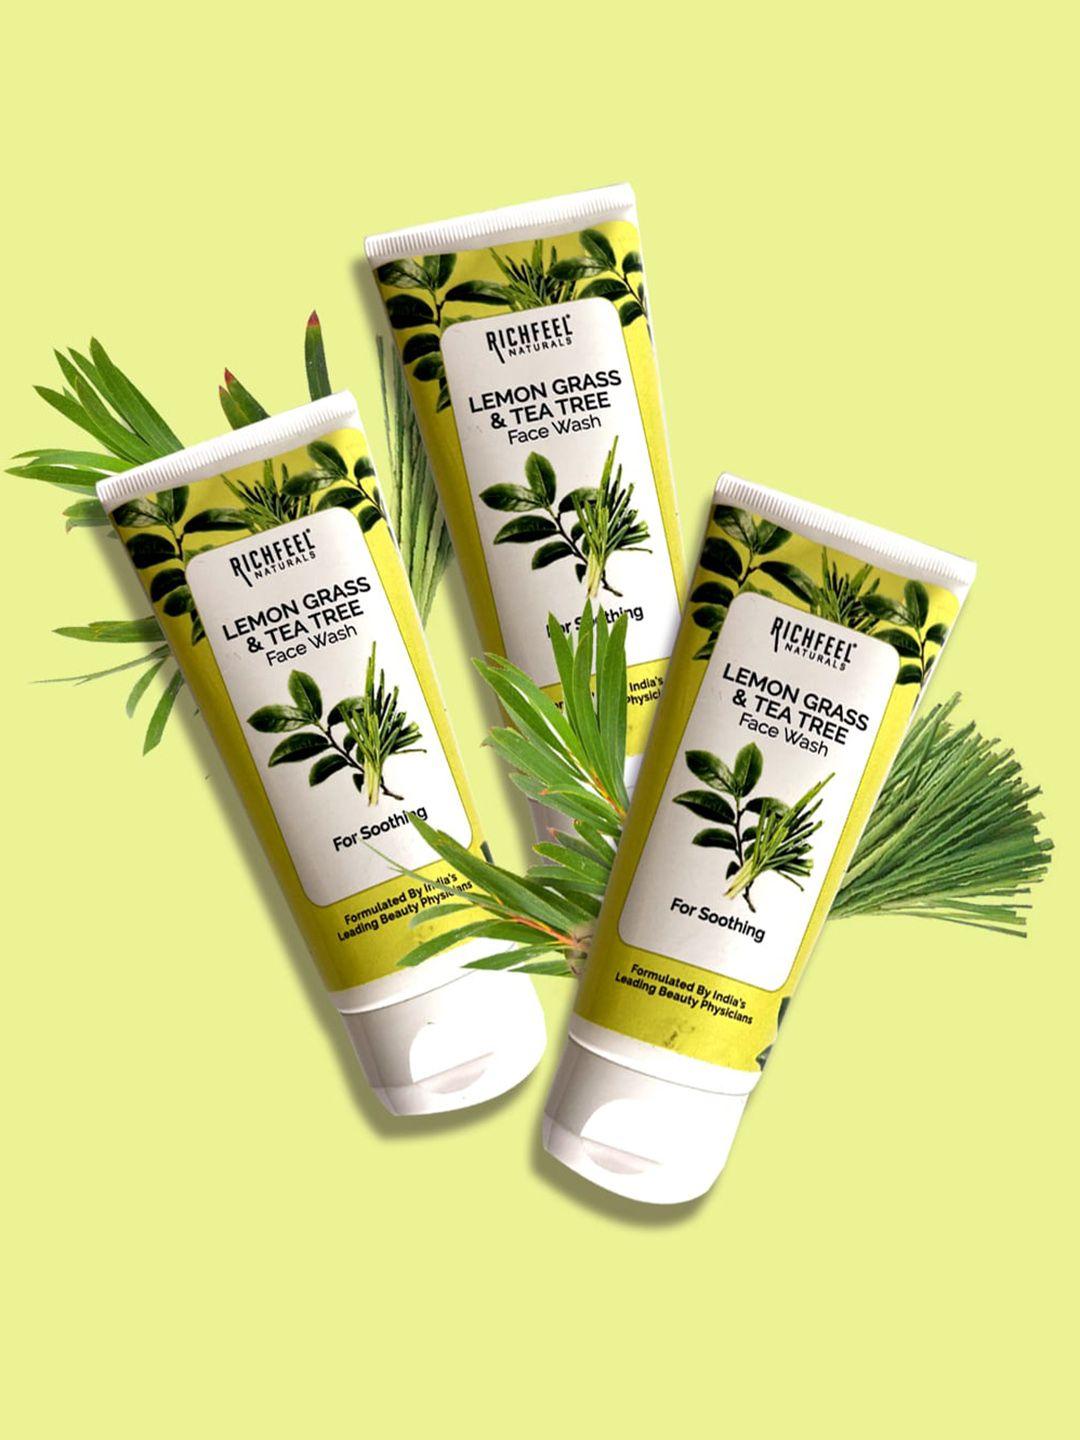 richfeel set of 3 lemon grass & tea tree face wash for soothing skin - 100 g each